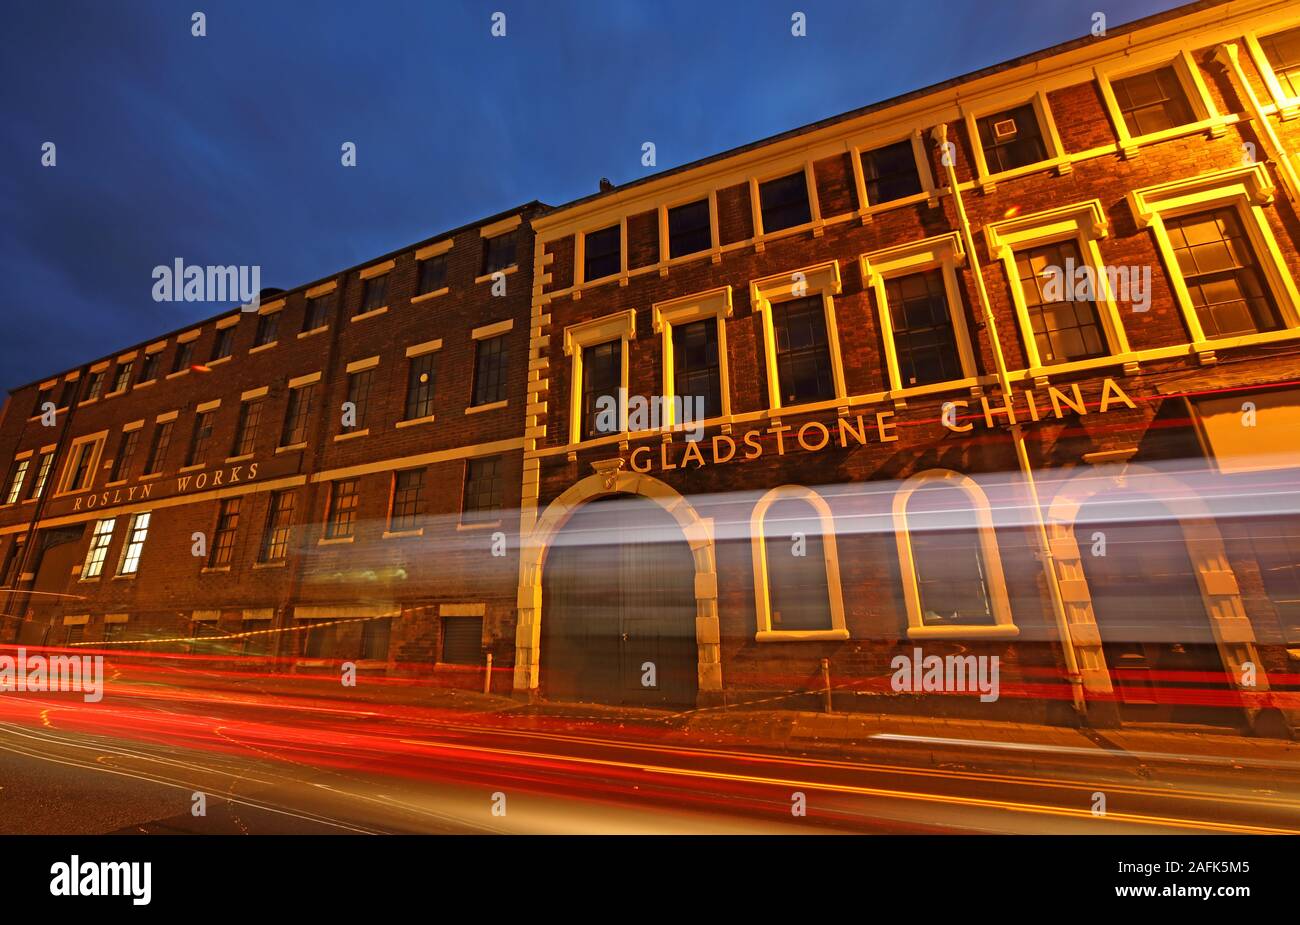 Gladstone China Factory, Longton, Stoke-On-Trent, Staffordshire, West Midlands, Angleterre, Royaume-Uni - Uttoxeter Rd, Longton, Stoke-On-Trent 1 Pq Banque D'Images